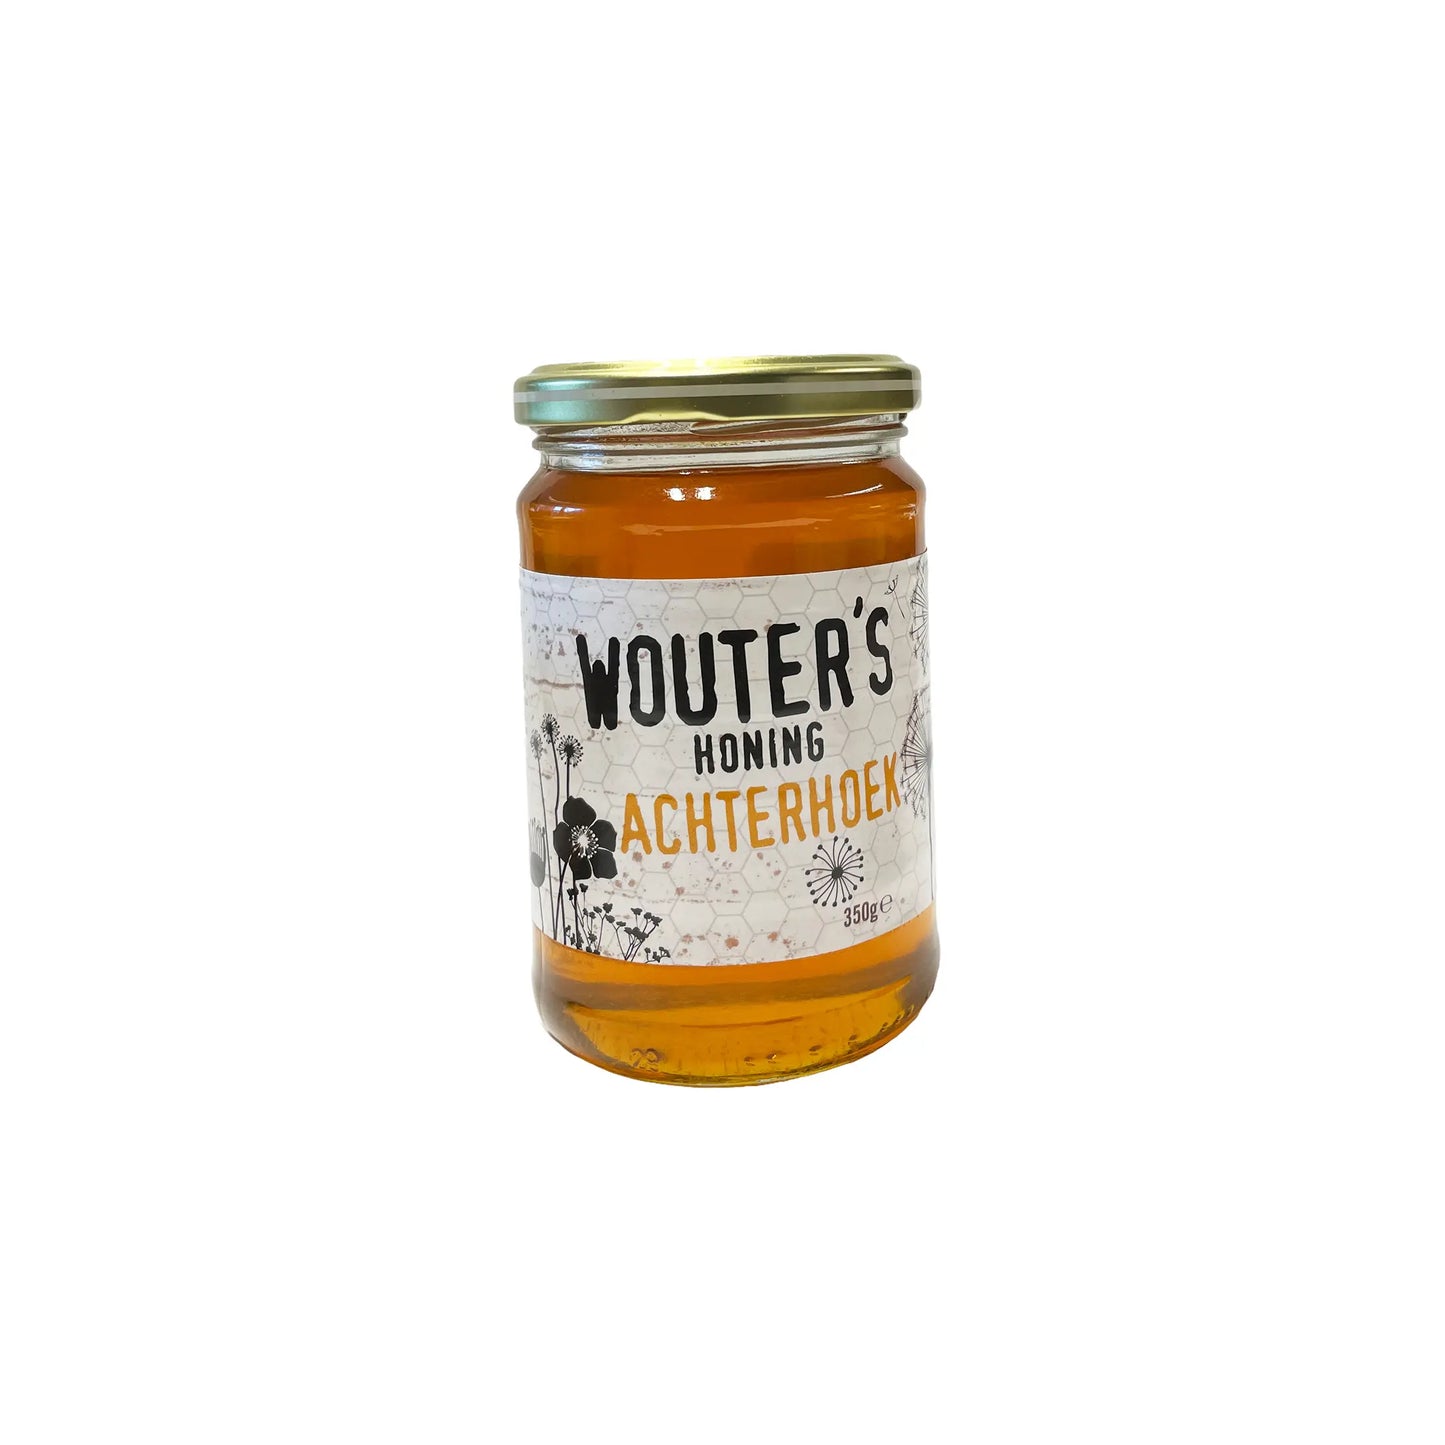 Wouter's streekhoning honing achterhoek 350g Nederland (vloeibaar)